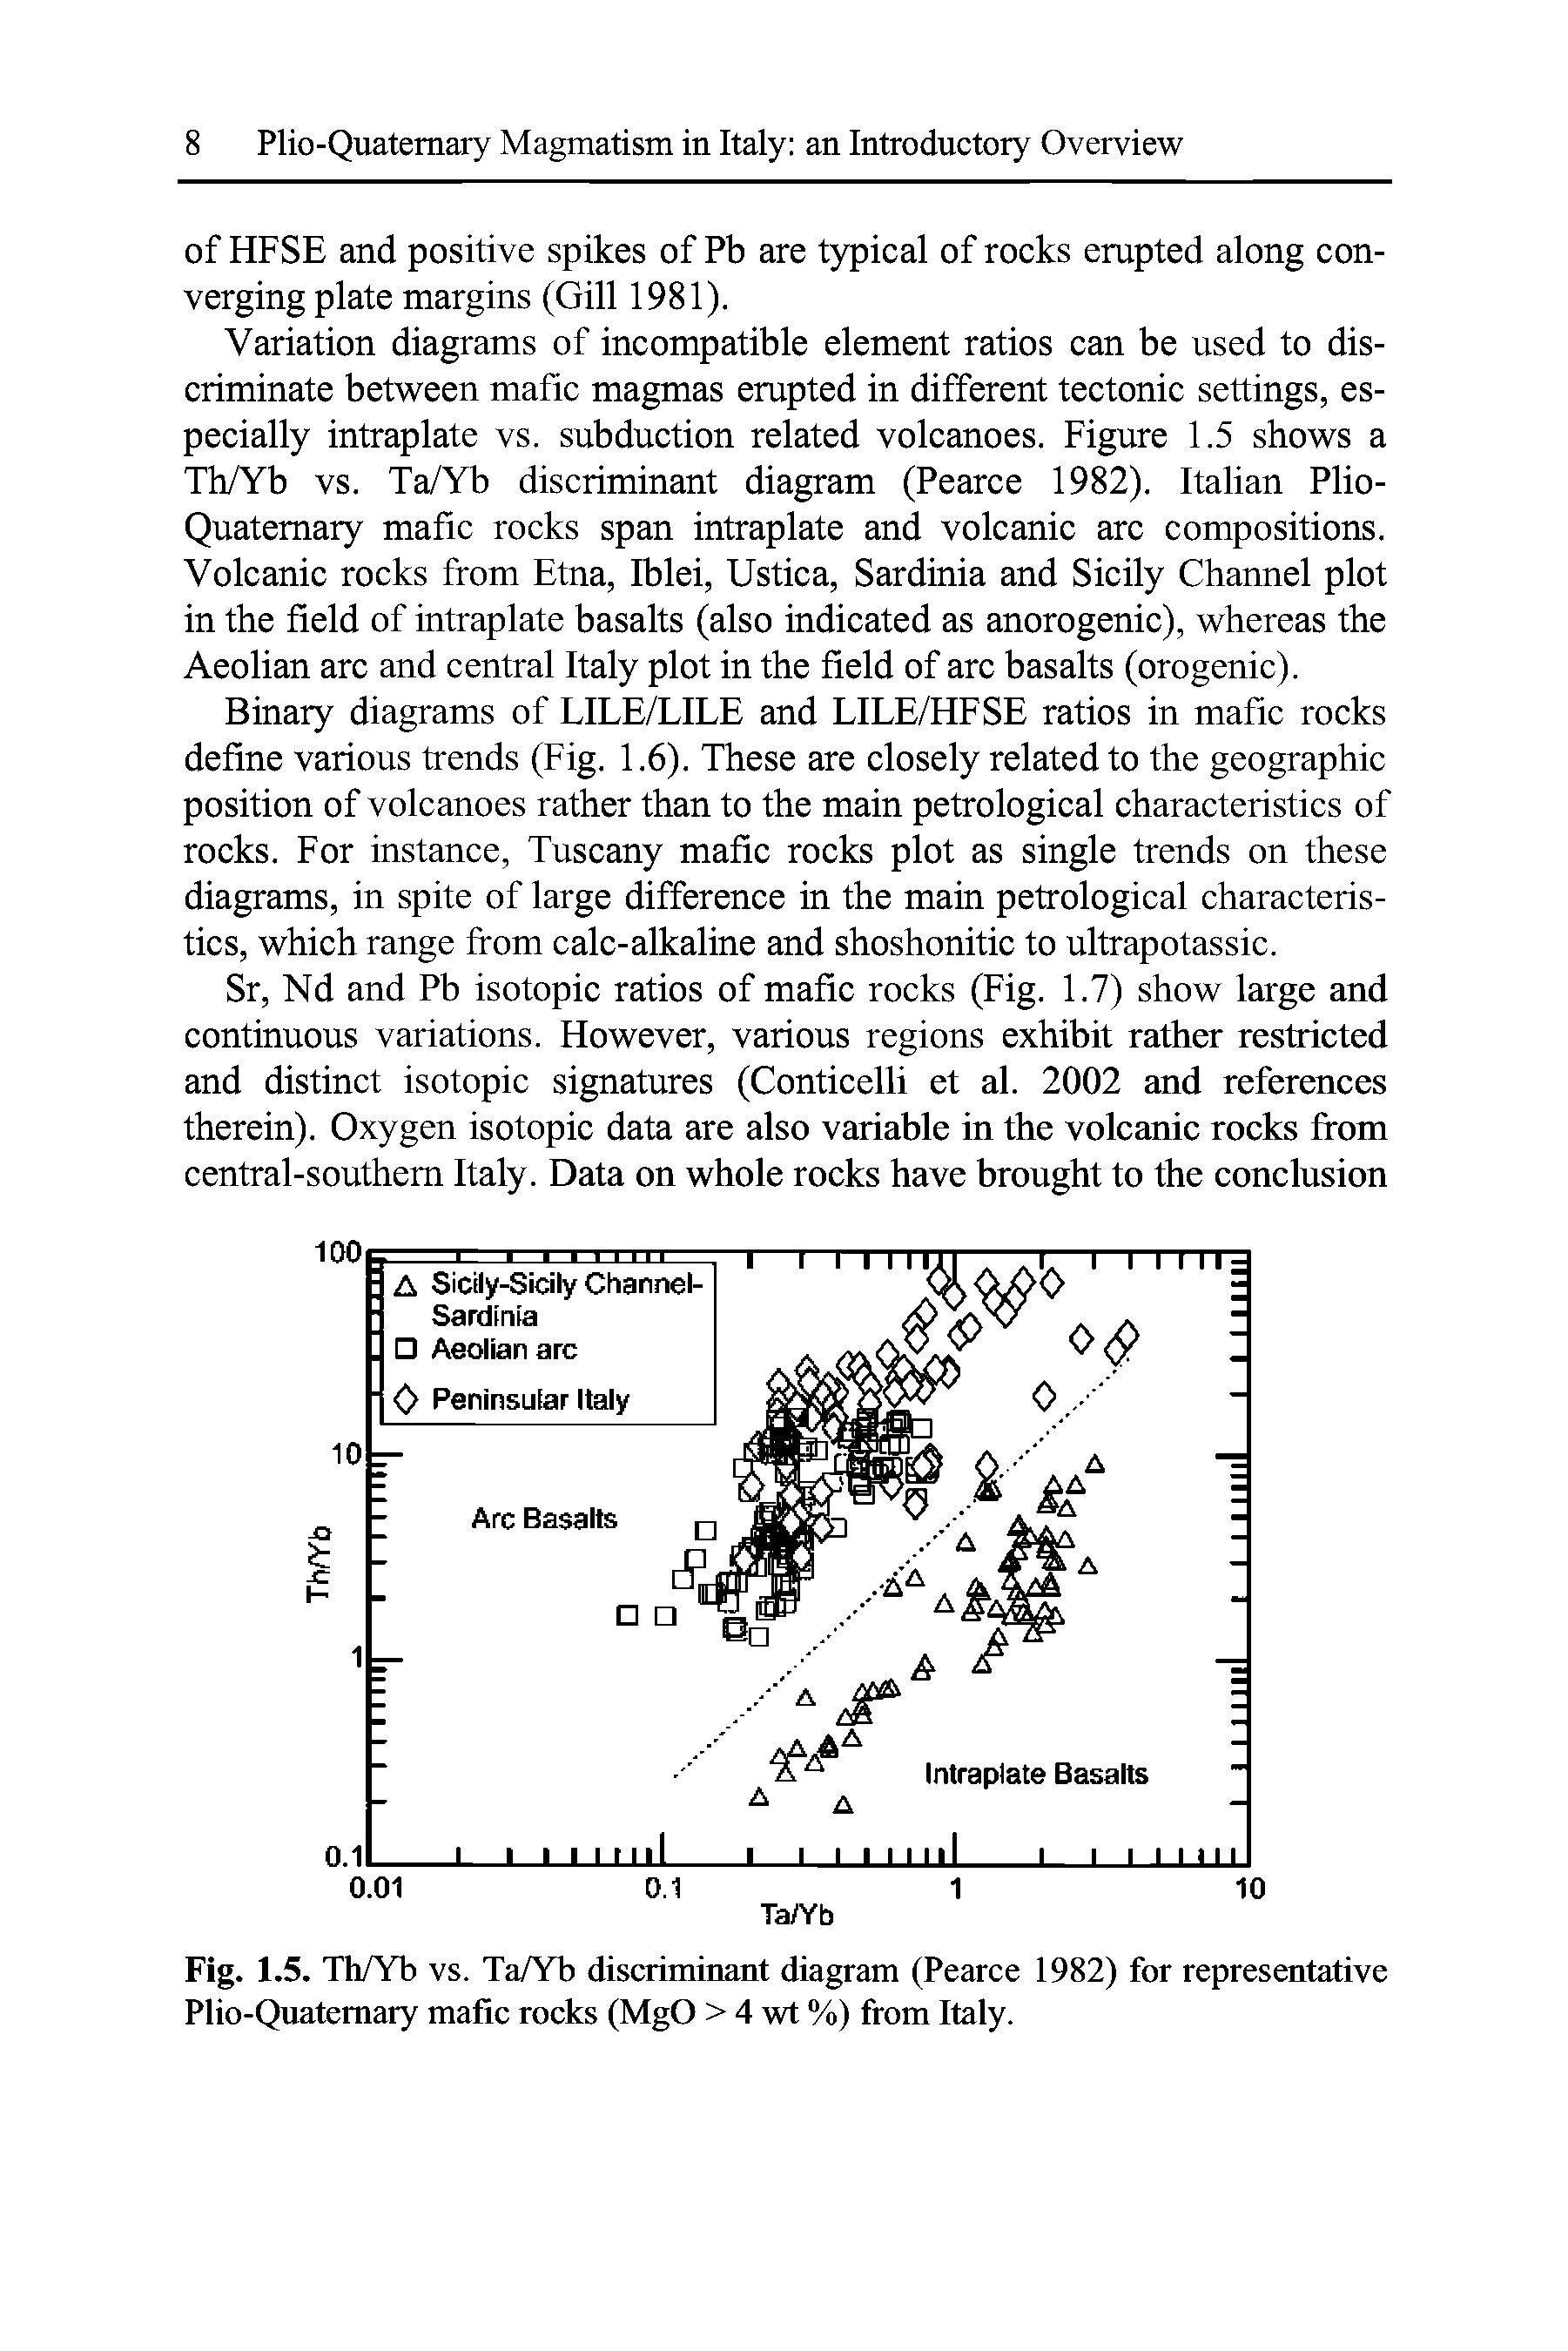 Fig. 1.5. ThYb vs. Ta/Yb discriminant diagram (Pearce 1982) for representative Plio-Quatemary mafic rocks (MgO > 4 wt %) from Italy.